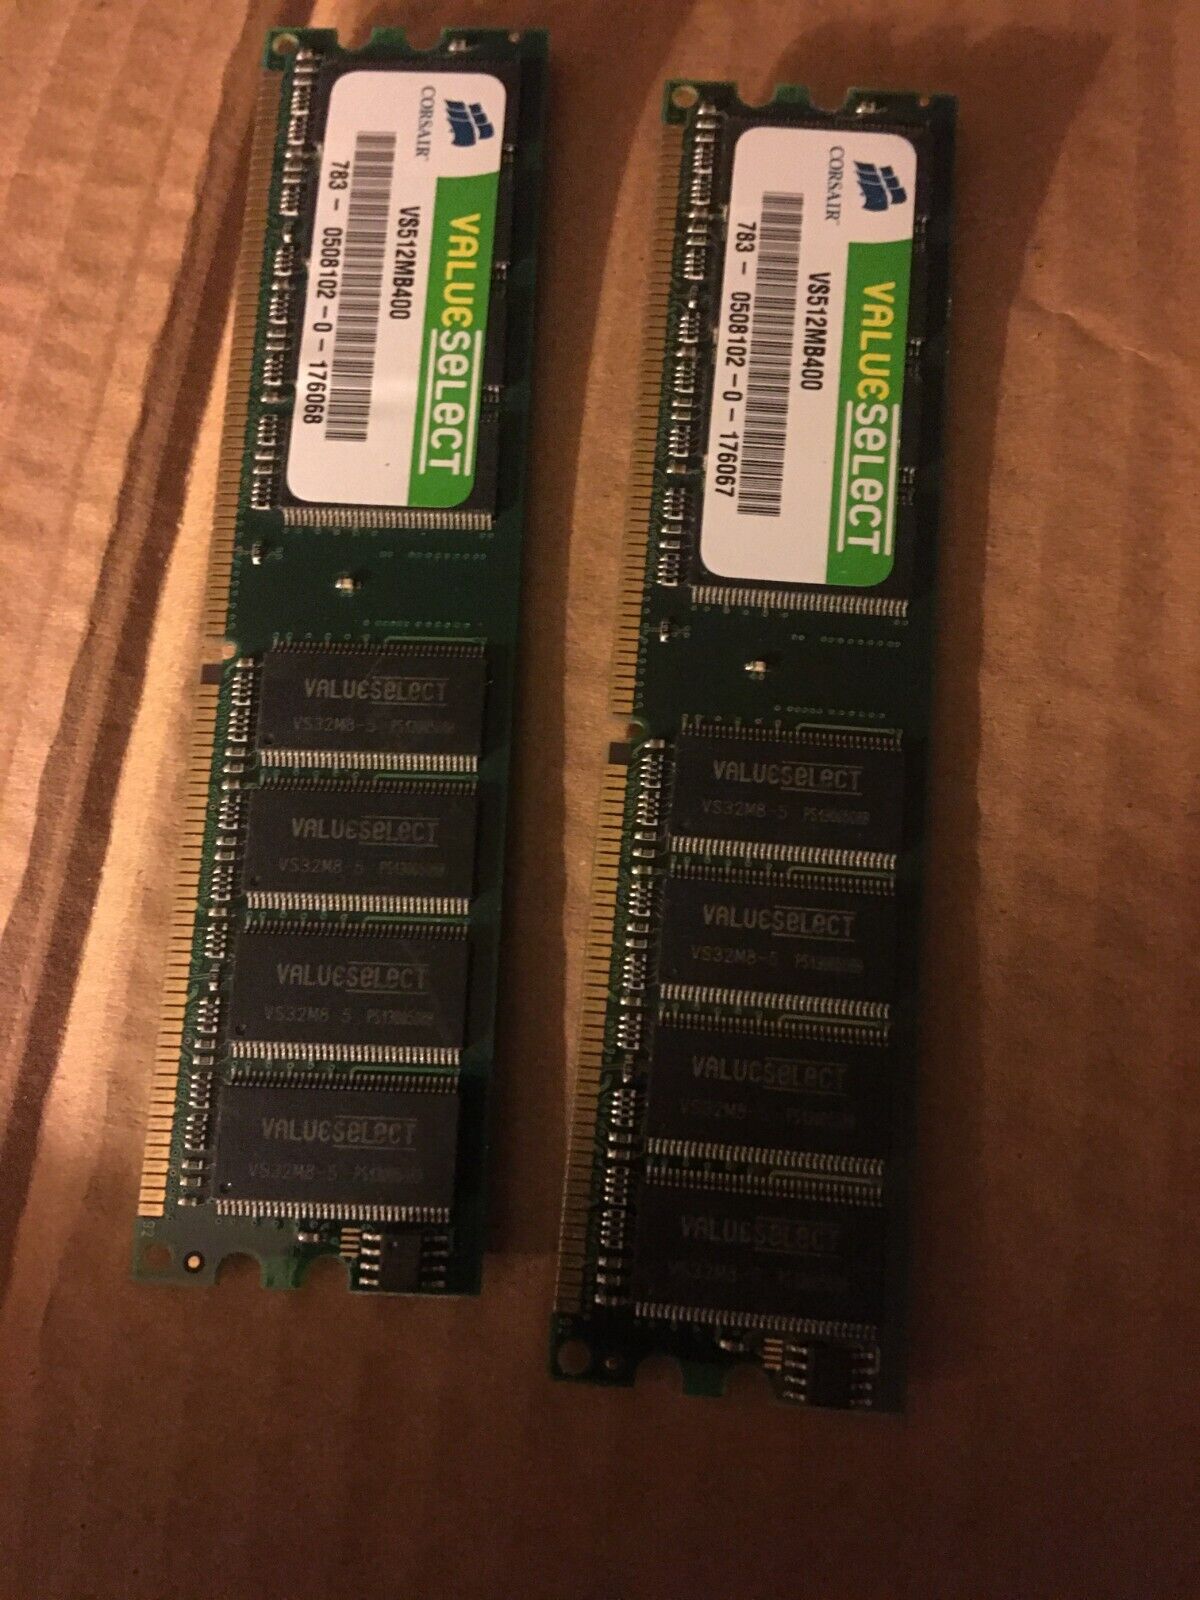 Corsair 512 MB DIMM 400 MHz DDR Memory (VS512MB400) 